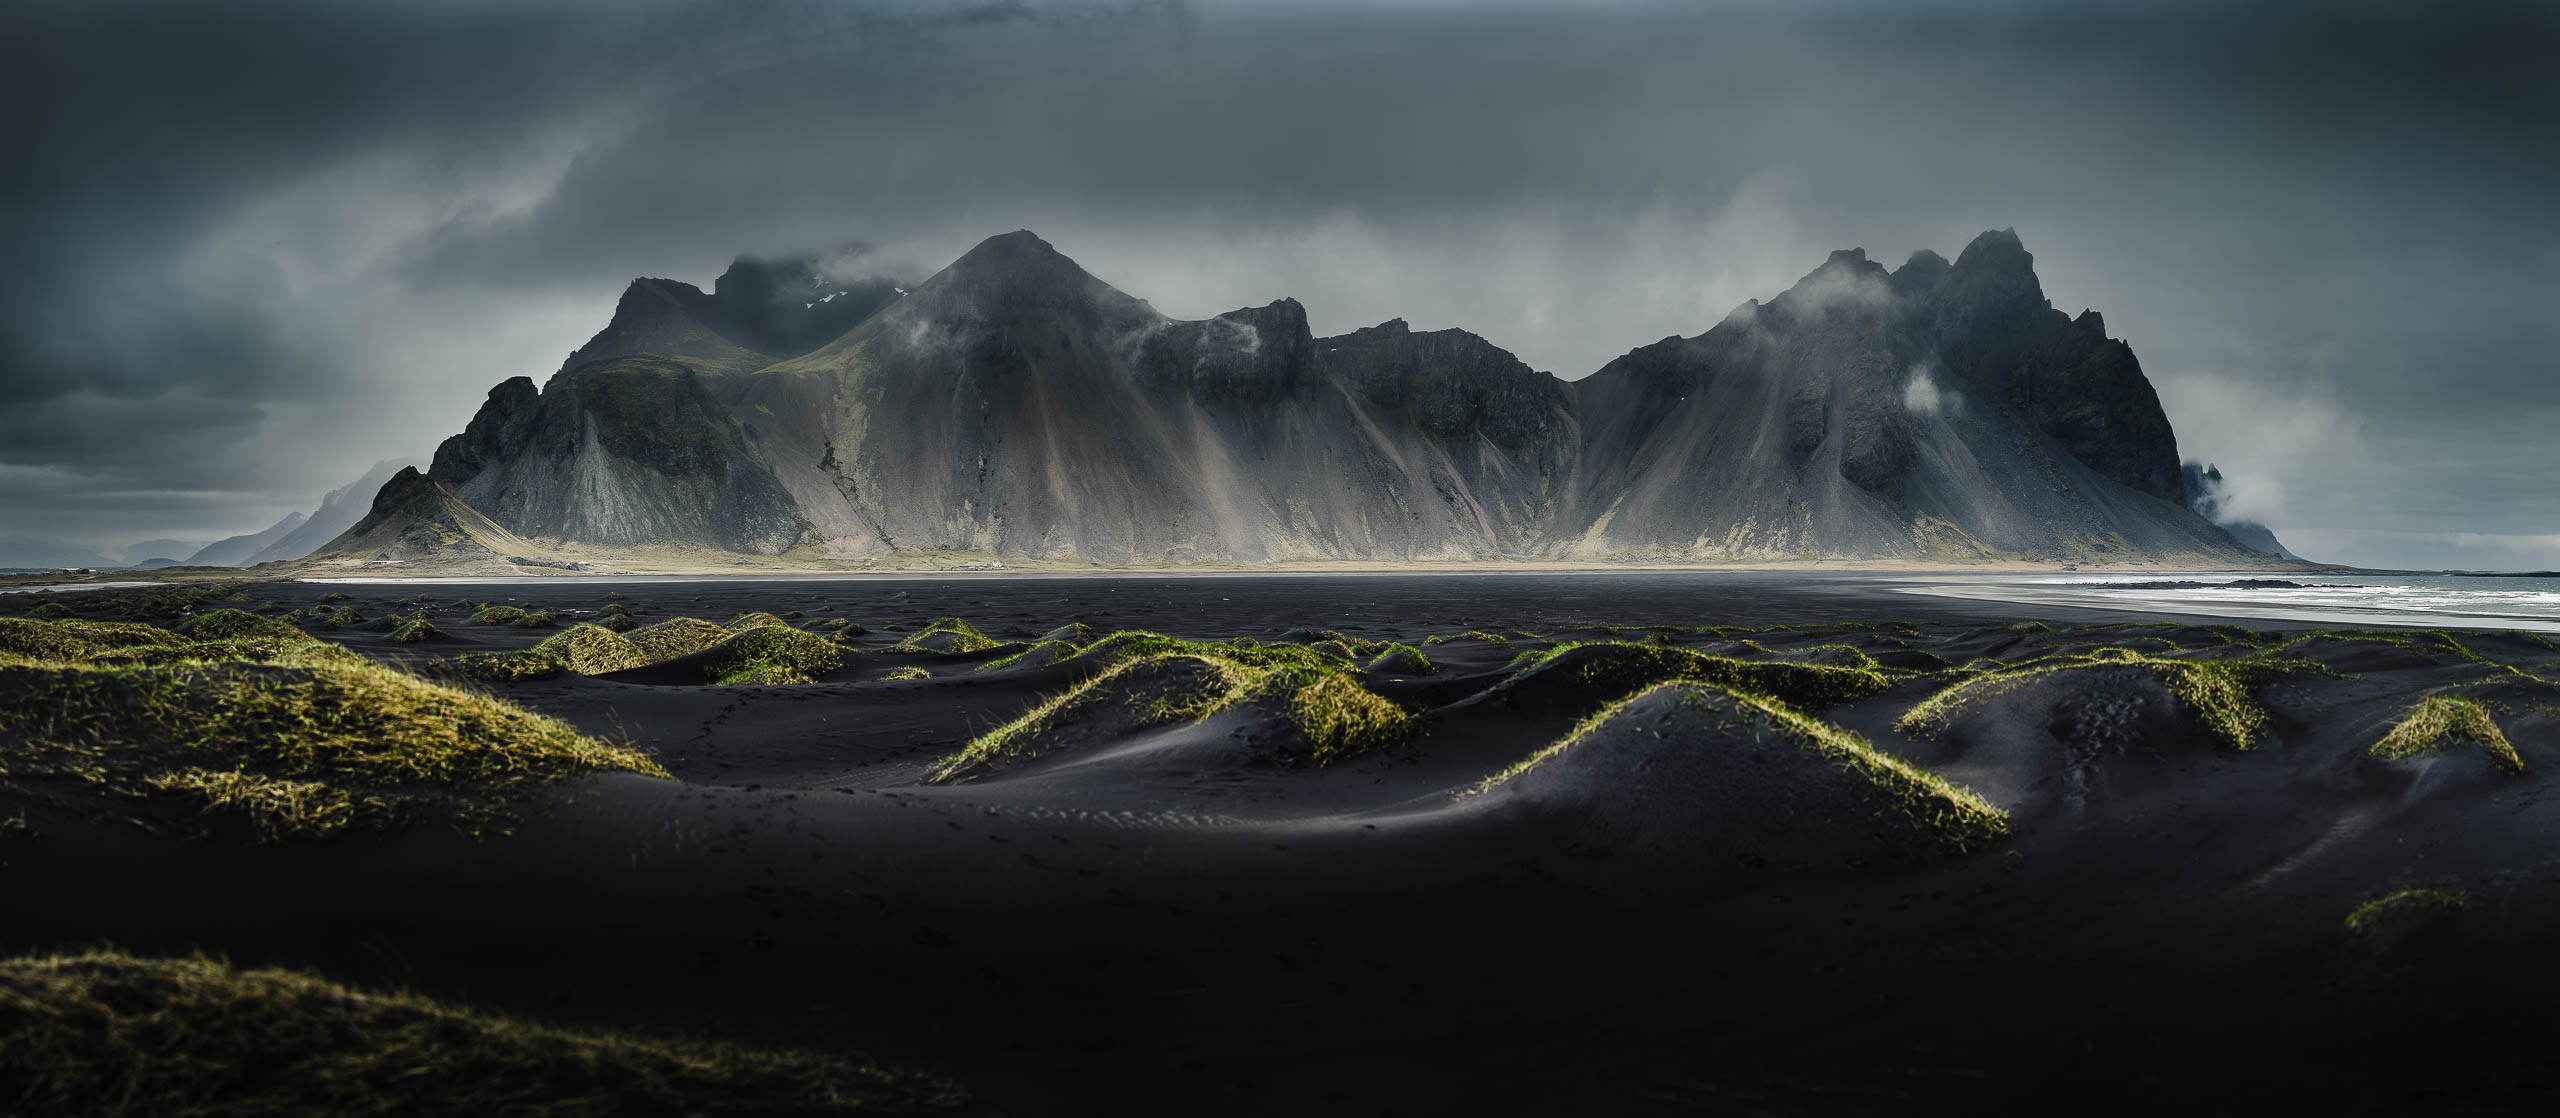 Vestrahorn, Iceland. 56 frame Panorama, Sigma 105mm f/1.4 Art @ f/2, 1/4000th, ISO 100